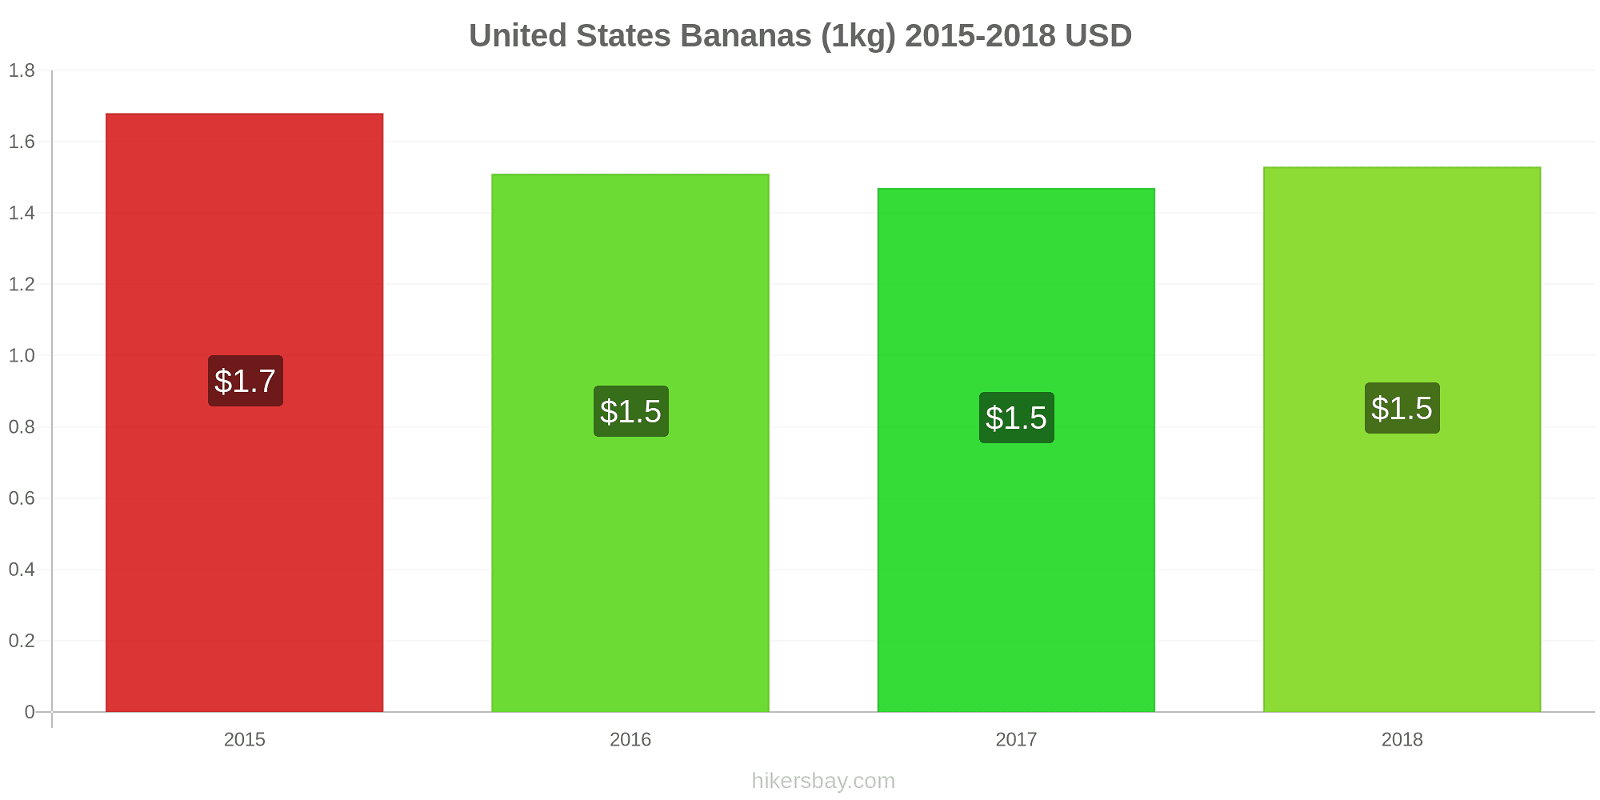 United States price changes Bananas (1kg) hikersbay.com